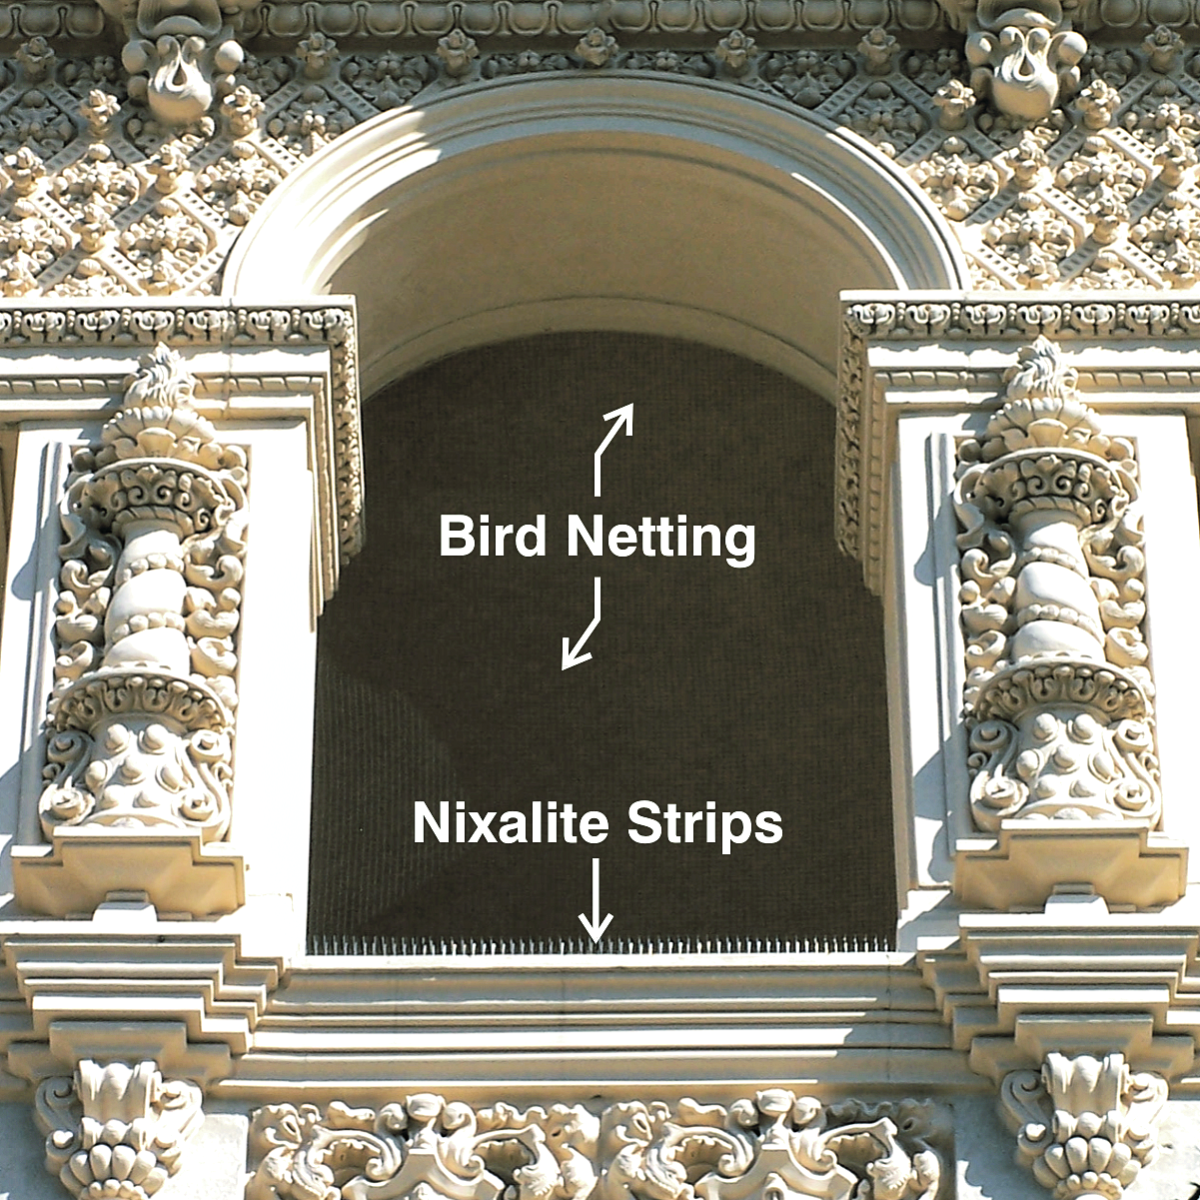 nixalite and Bird neting (1)